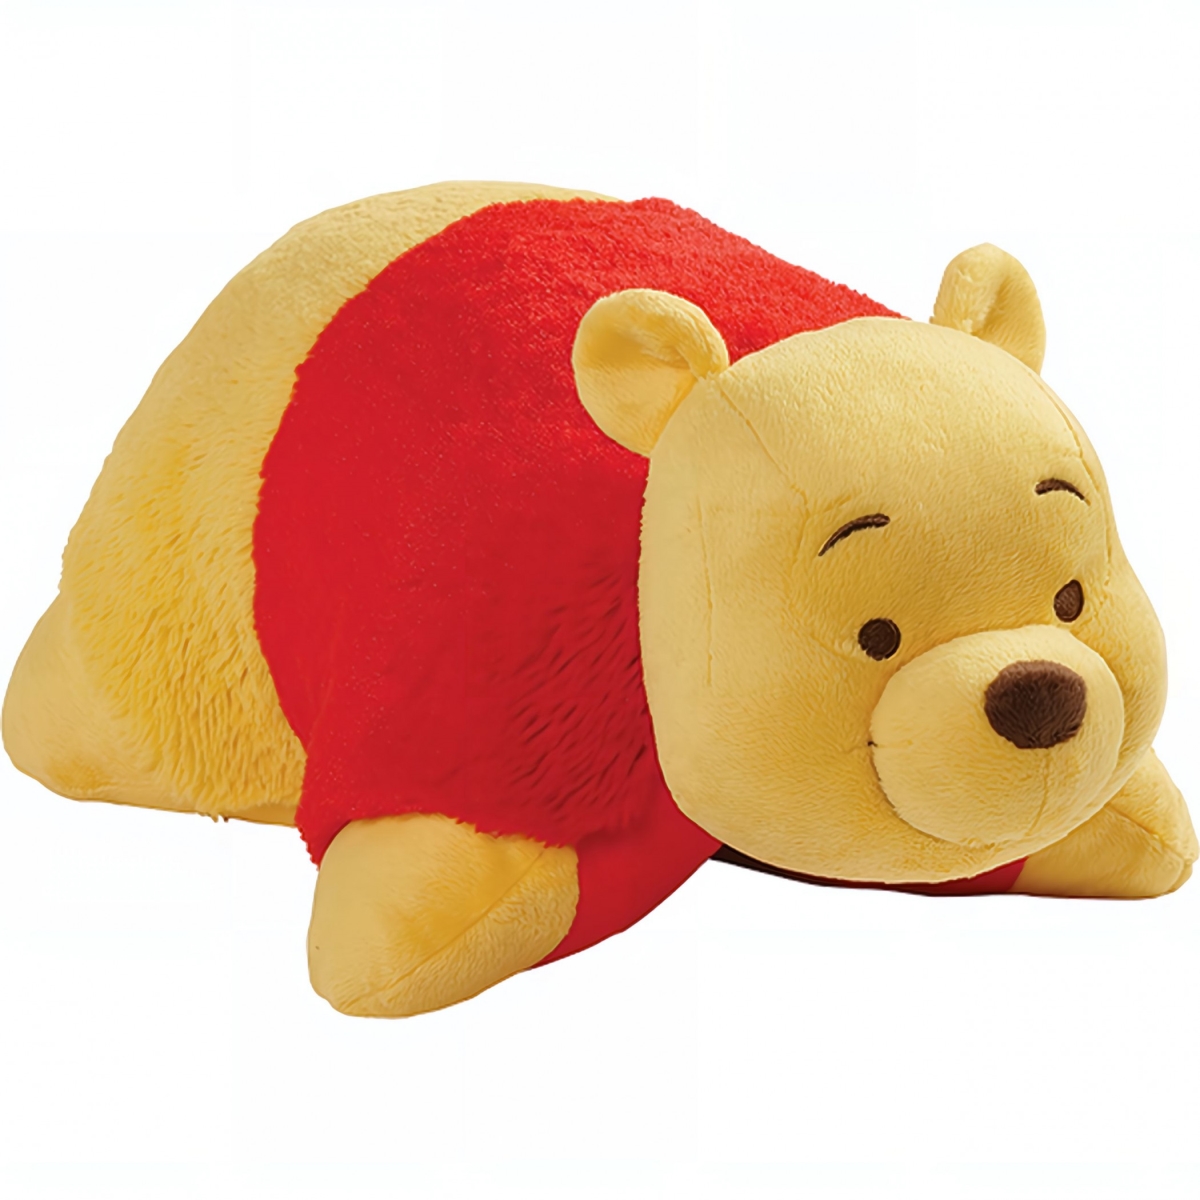 848966  Bear Pillow Pet Stuffed Animal Plush Toy -  Winnie the Pooh